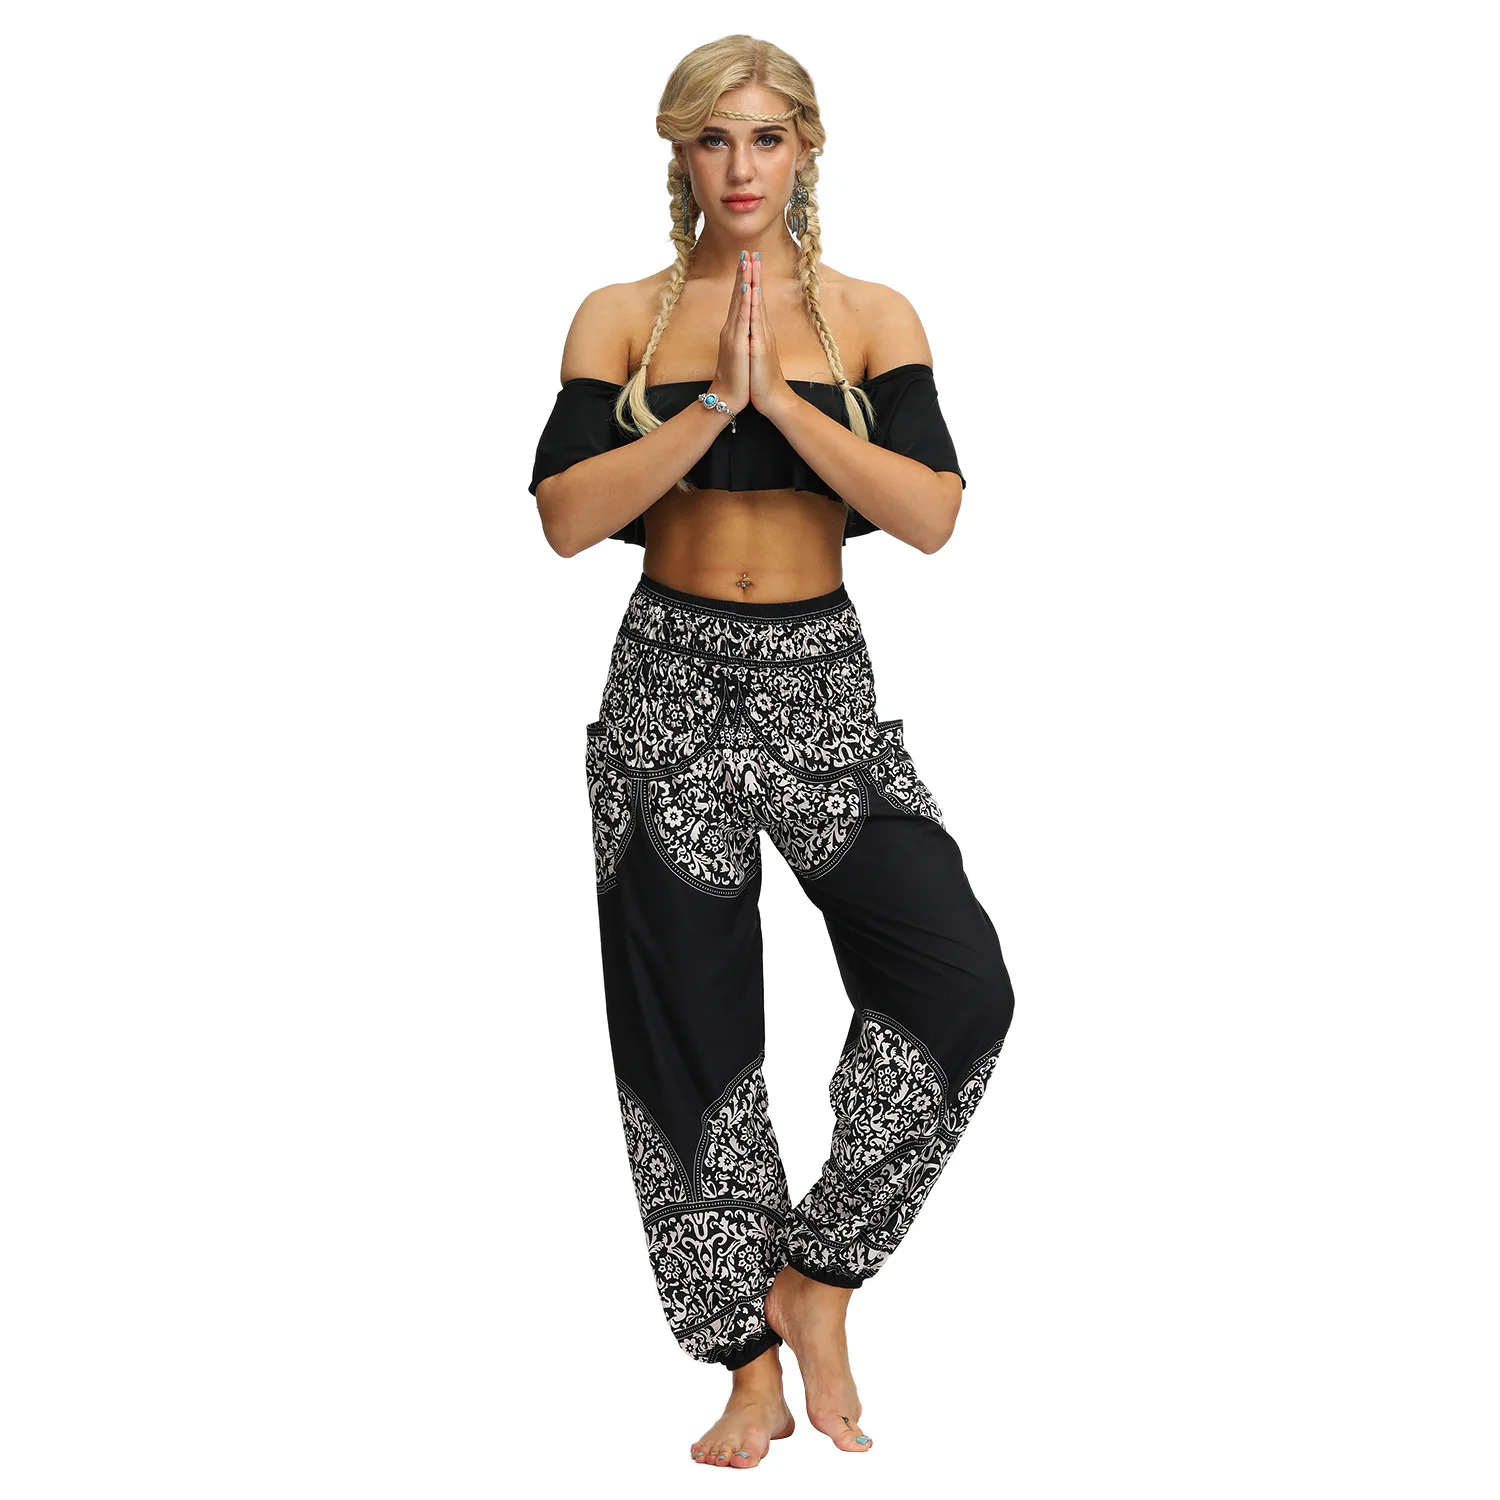 Women's Boho Pants High Waist Yoga Print Hippie Summer Beach Pants for Travel Vacation 2020 hot selling